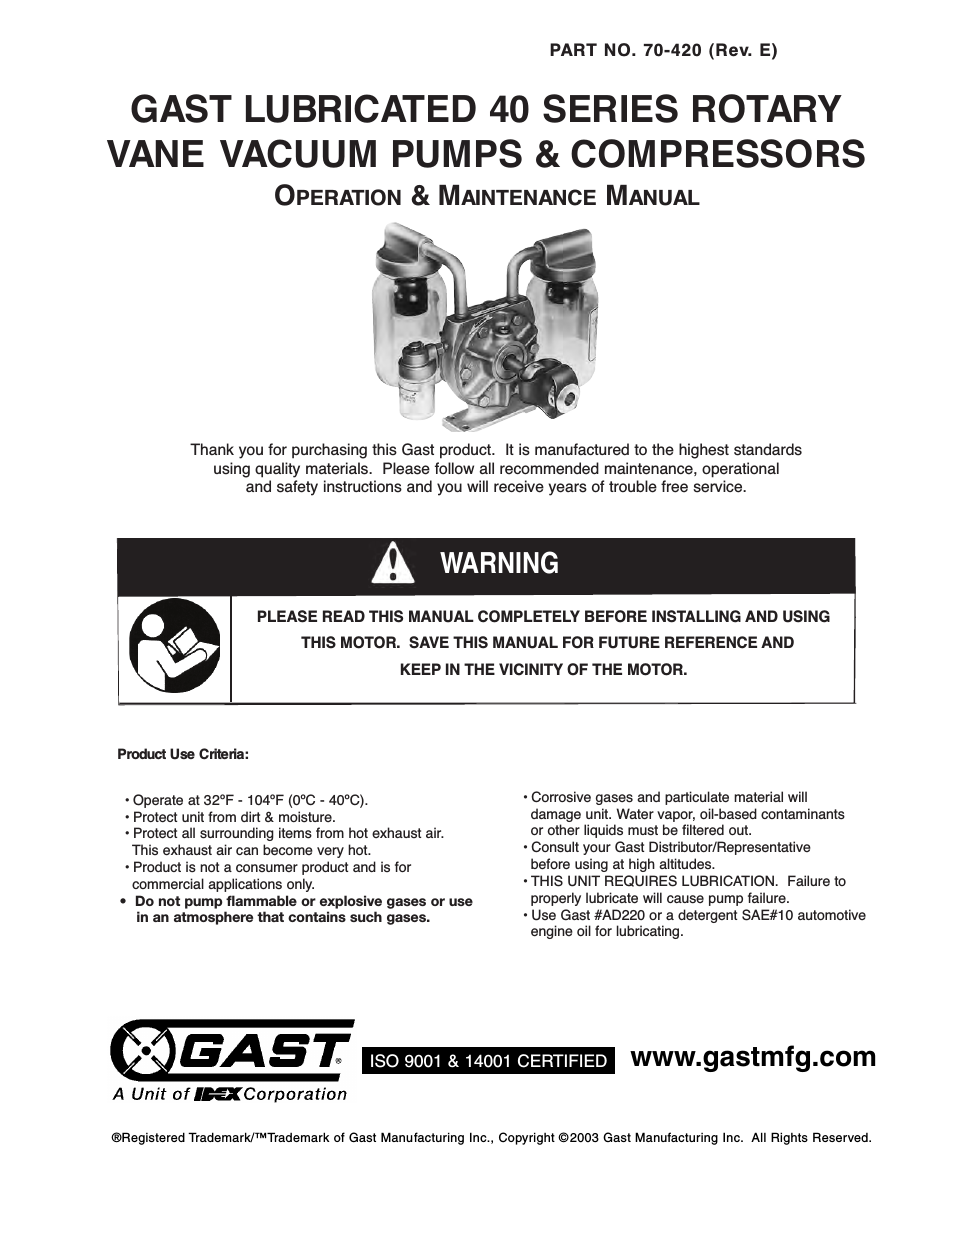 0240 Series Lubricated Vacuum Pumps and Comressors